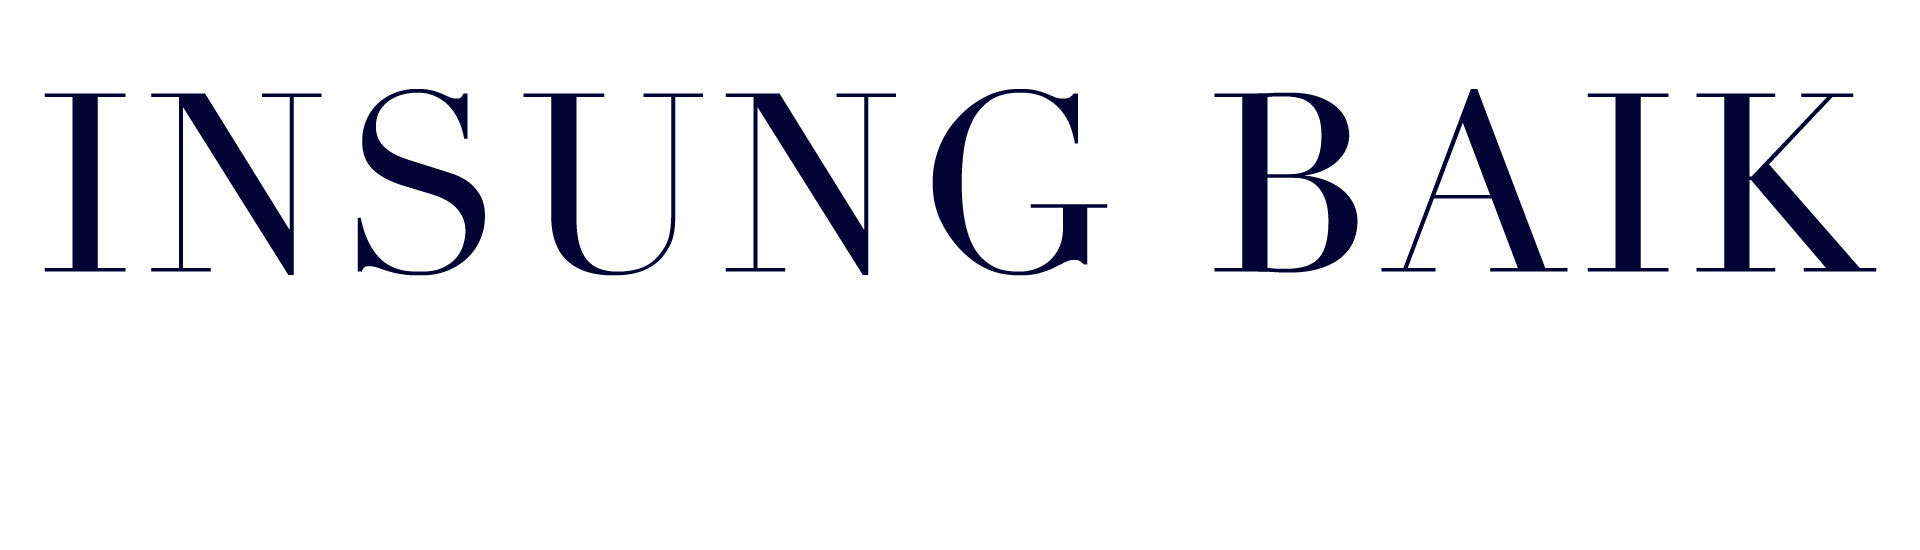 Insung Baik logo